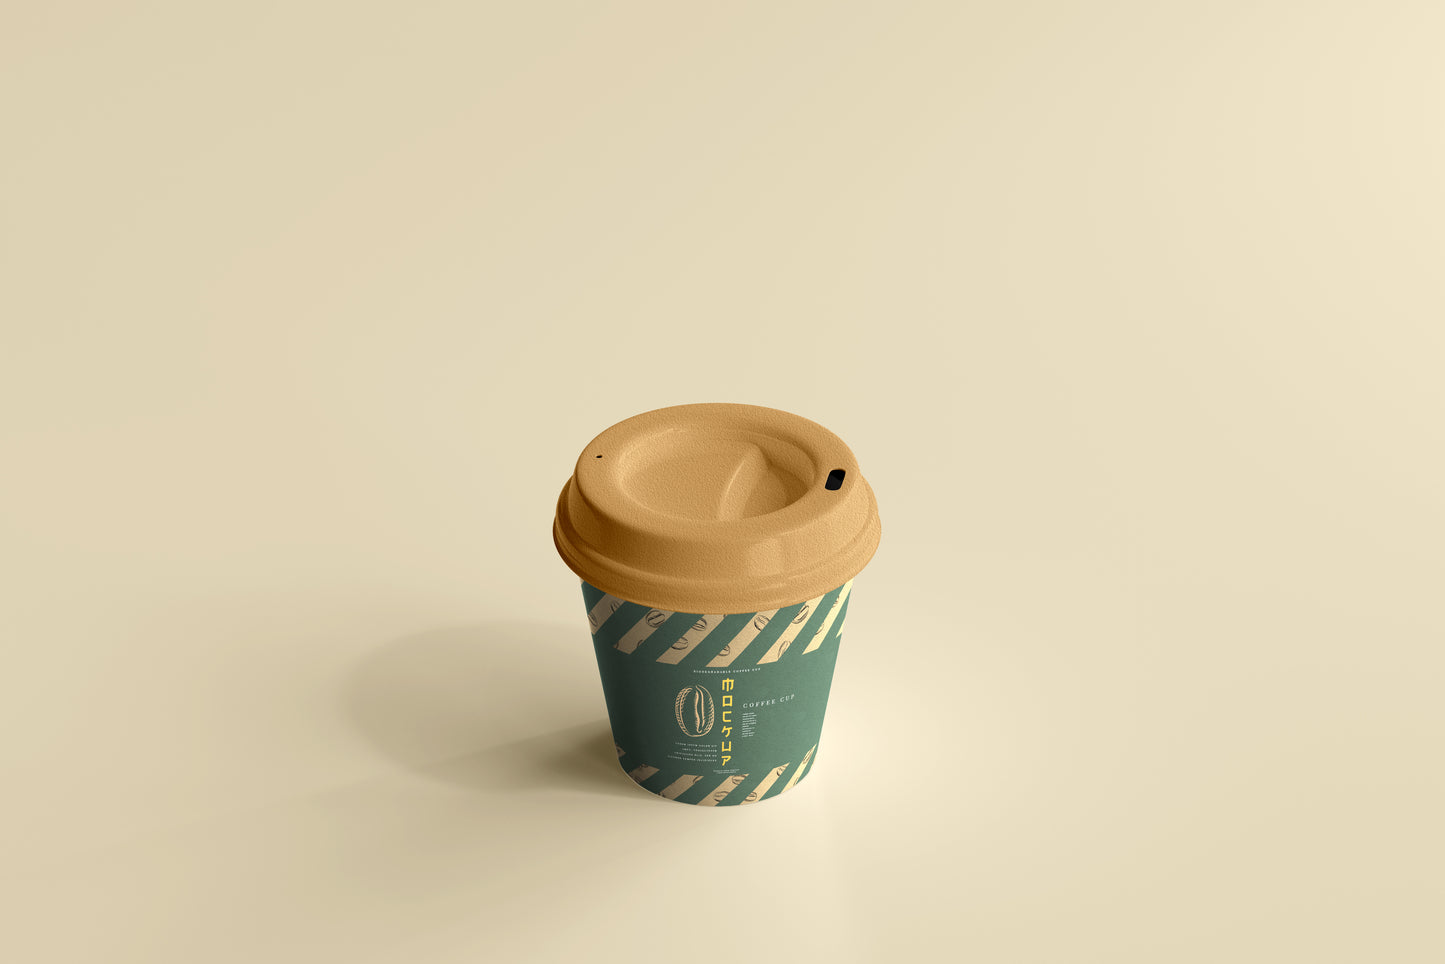 Biodegradable paper cup mockups